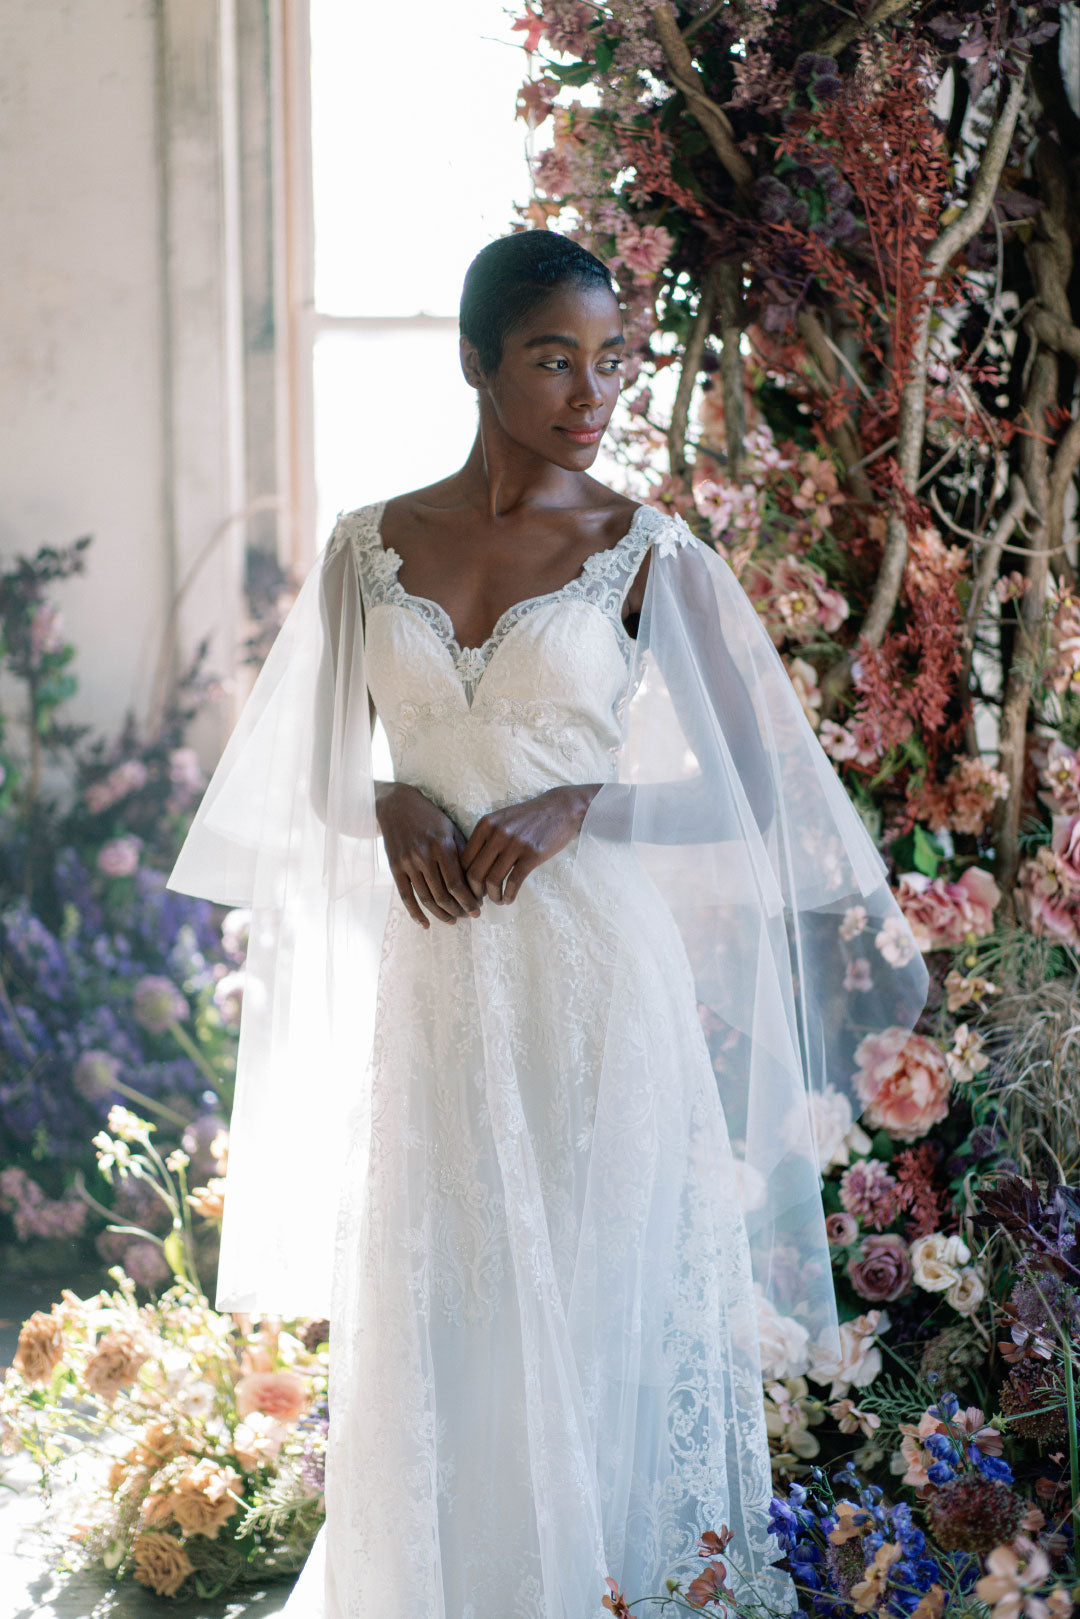 Julia Fox Wore An Actual Wedding Dress To New York Fashion Week